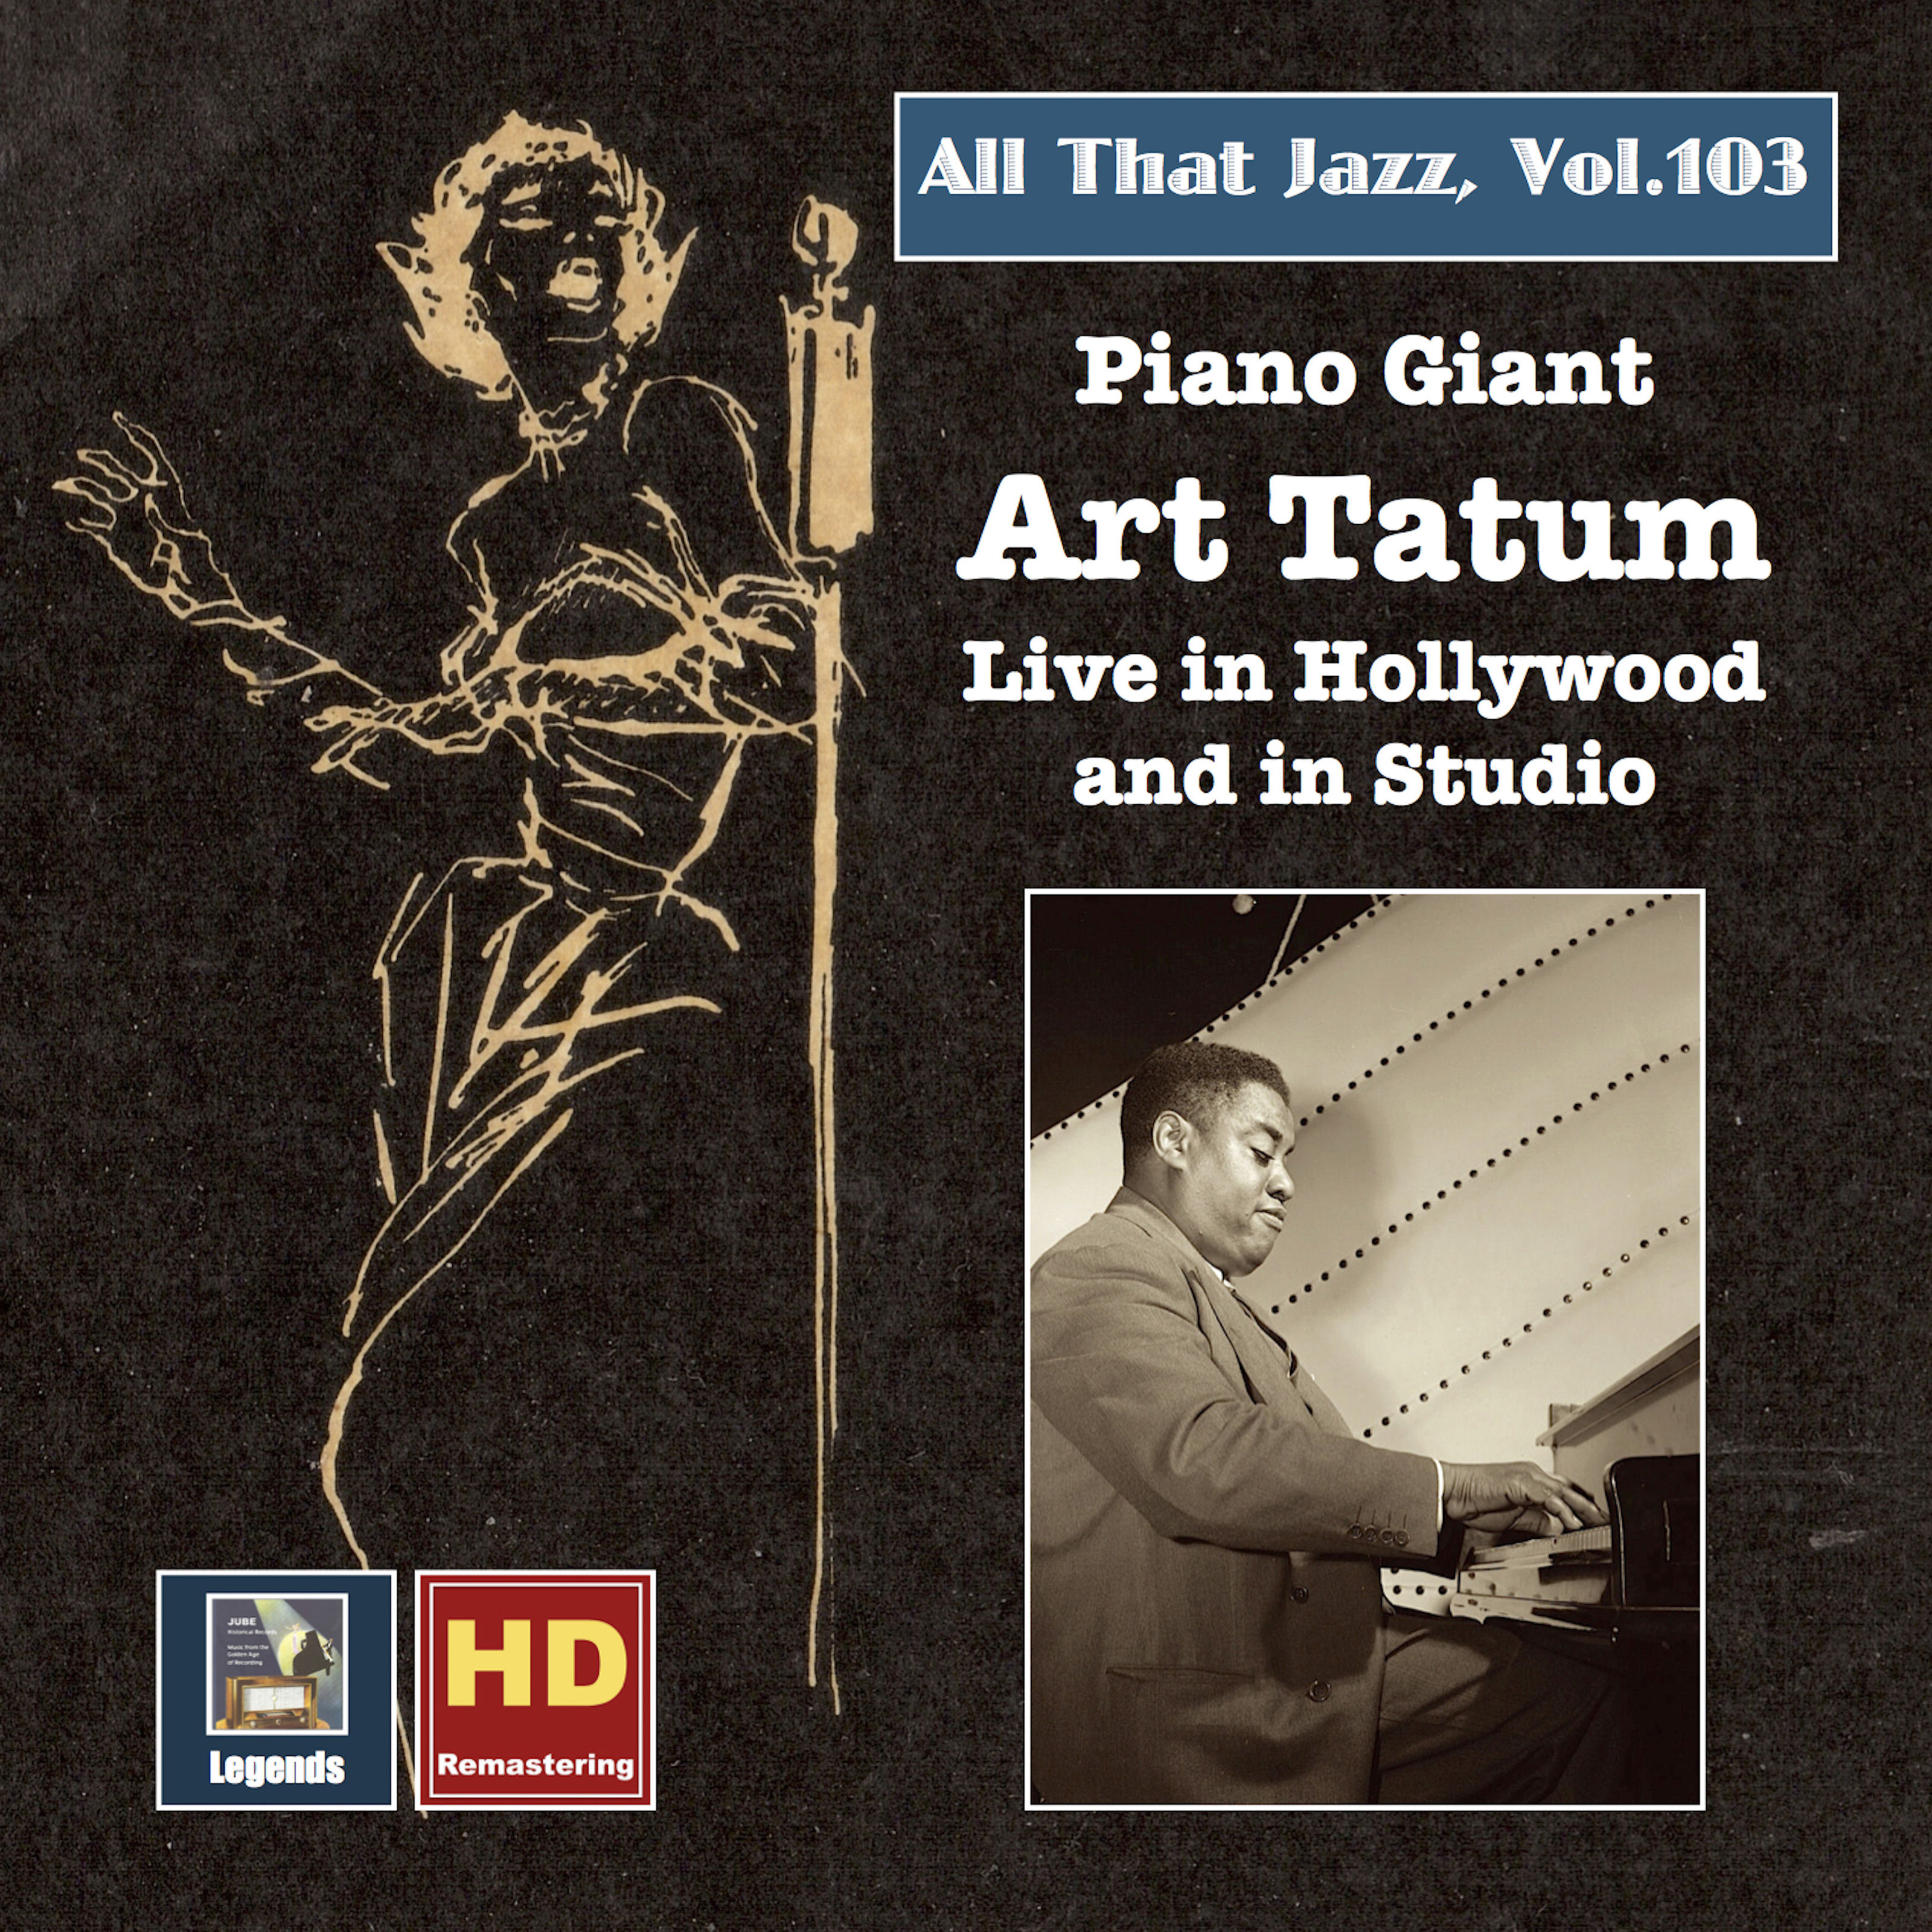 Art Tatum - All That Jazz, Vol. 103 - Piano Giant - Art Tatum Live in Hollywood and in Studio (2018) [FLAC 24bit/48kHz]